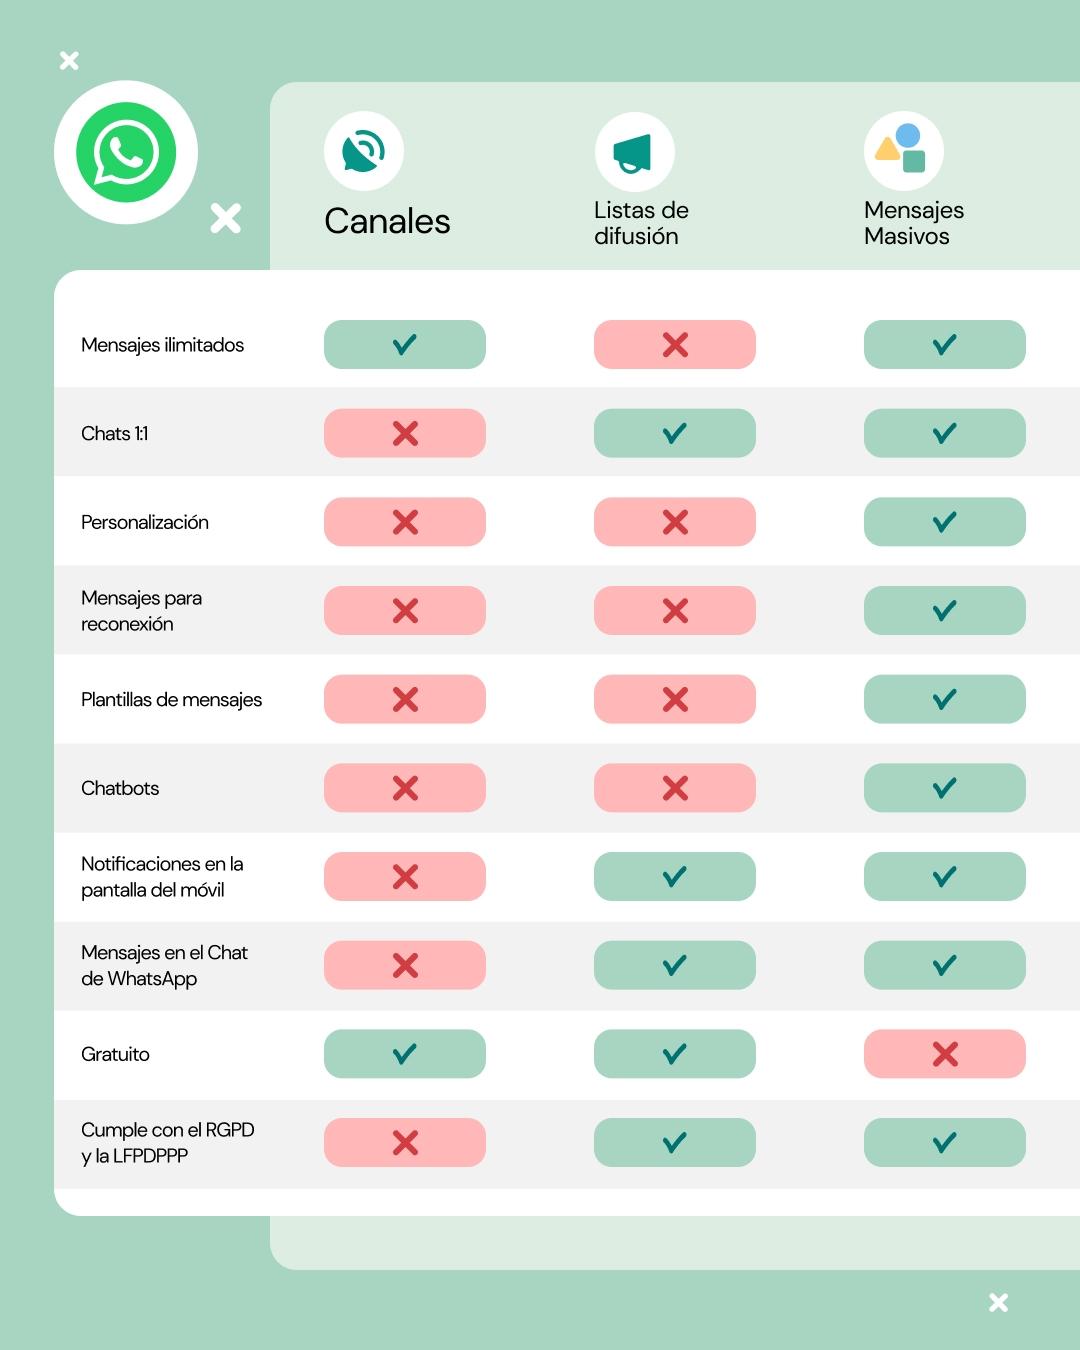 WhatsApp Channels Broadcast Campaigns Comparison Graphic - ES - 4-5 - 23cw39